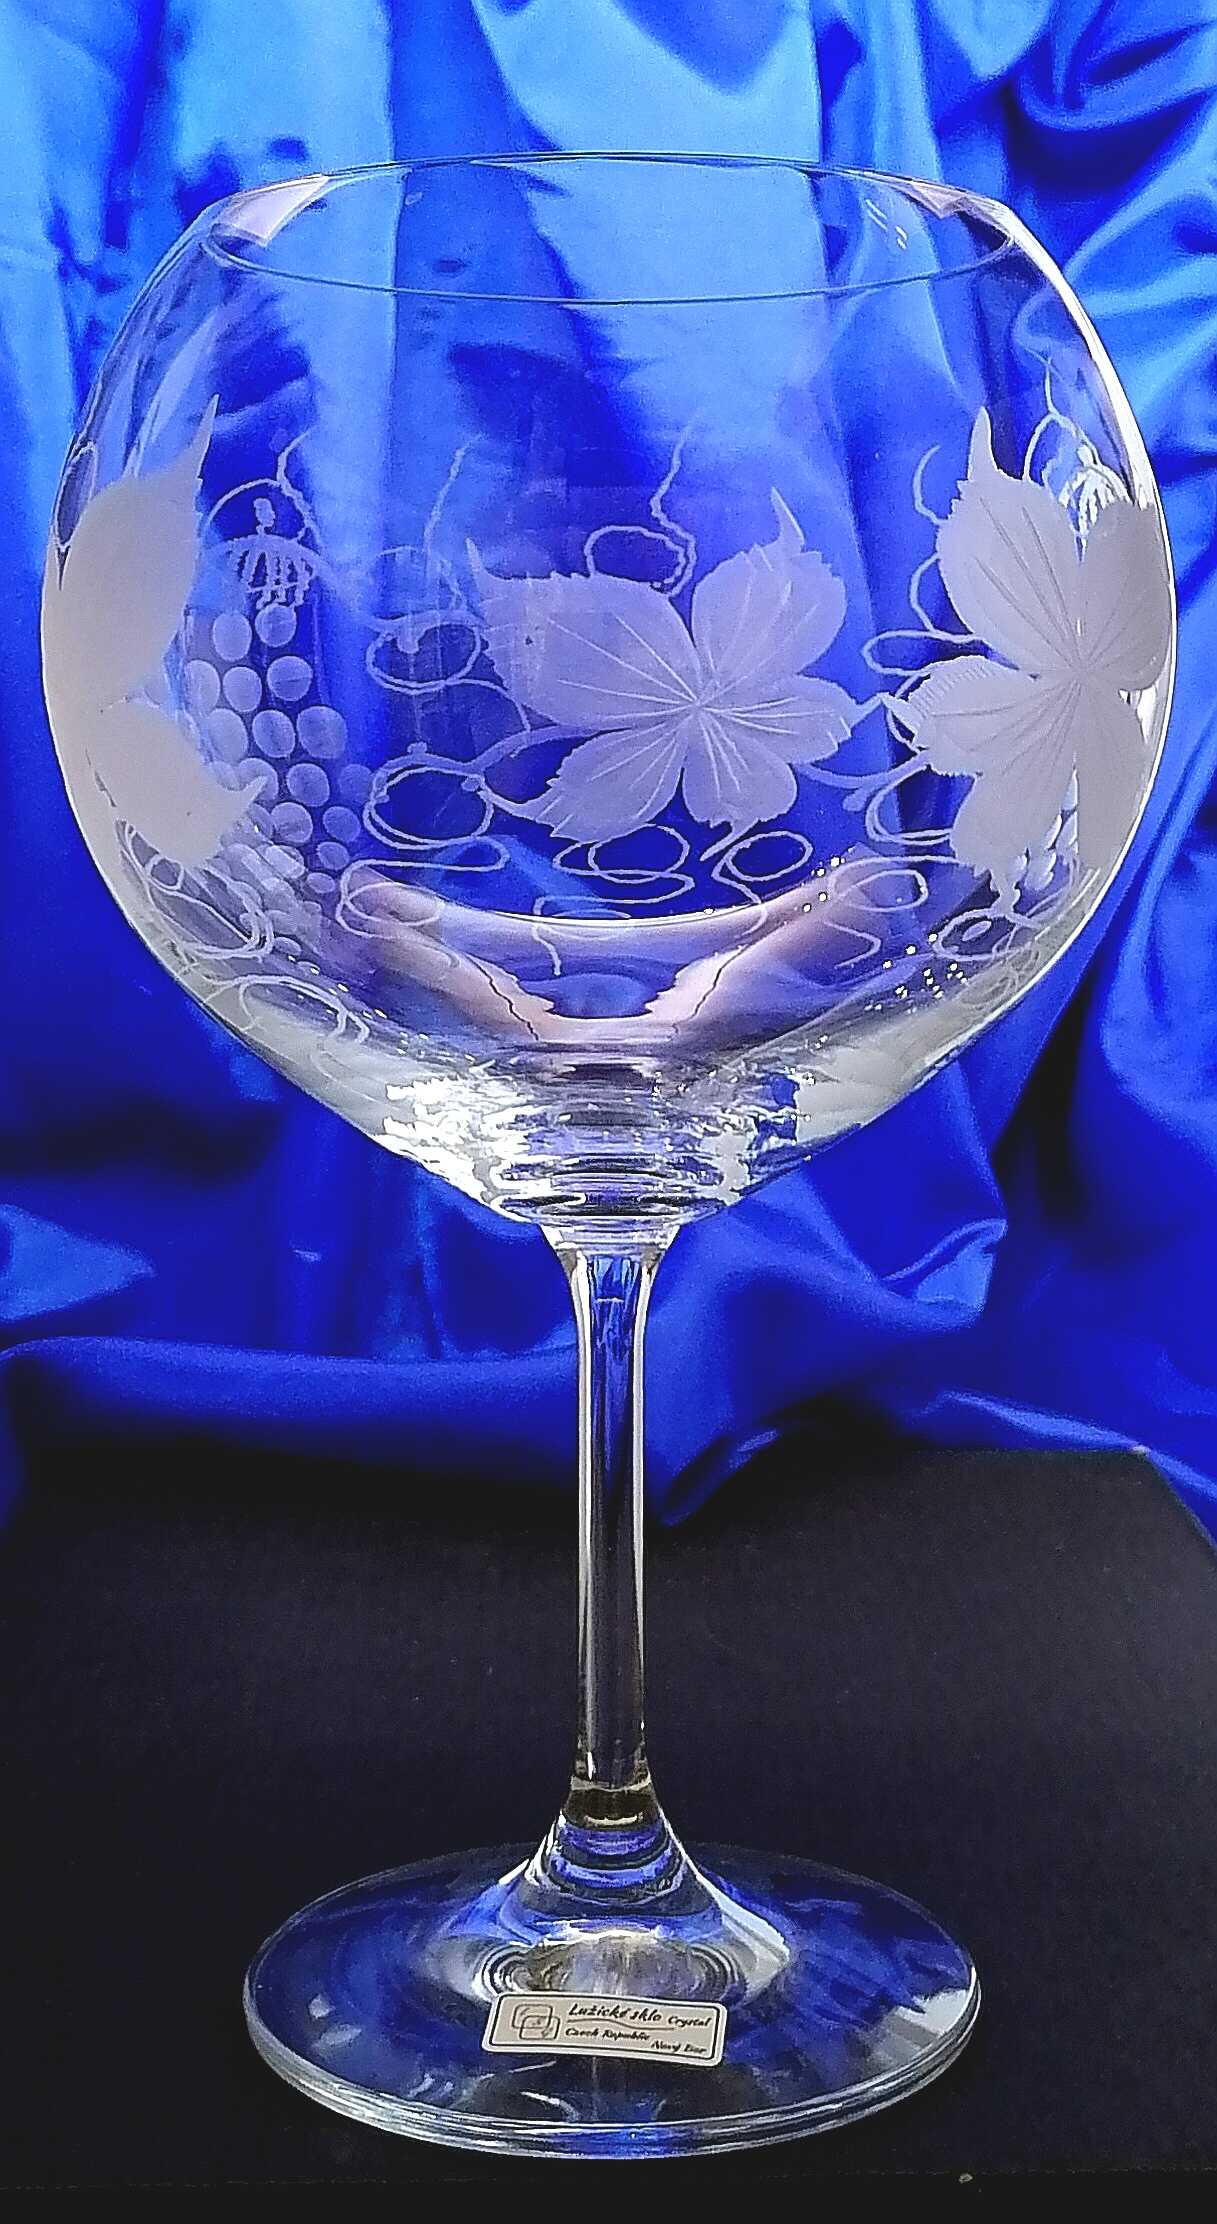 LsG-Crystal Jubilejka číše sklenička k výročí dekor Víno J-061 900 ml 1 Ks.